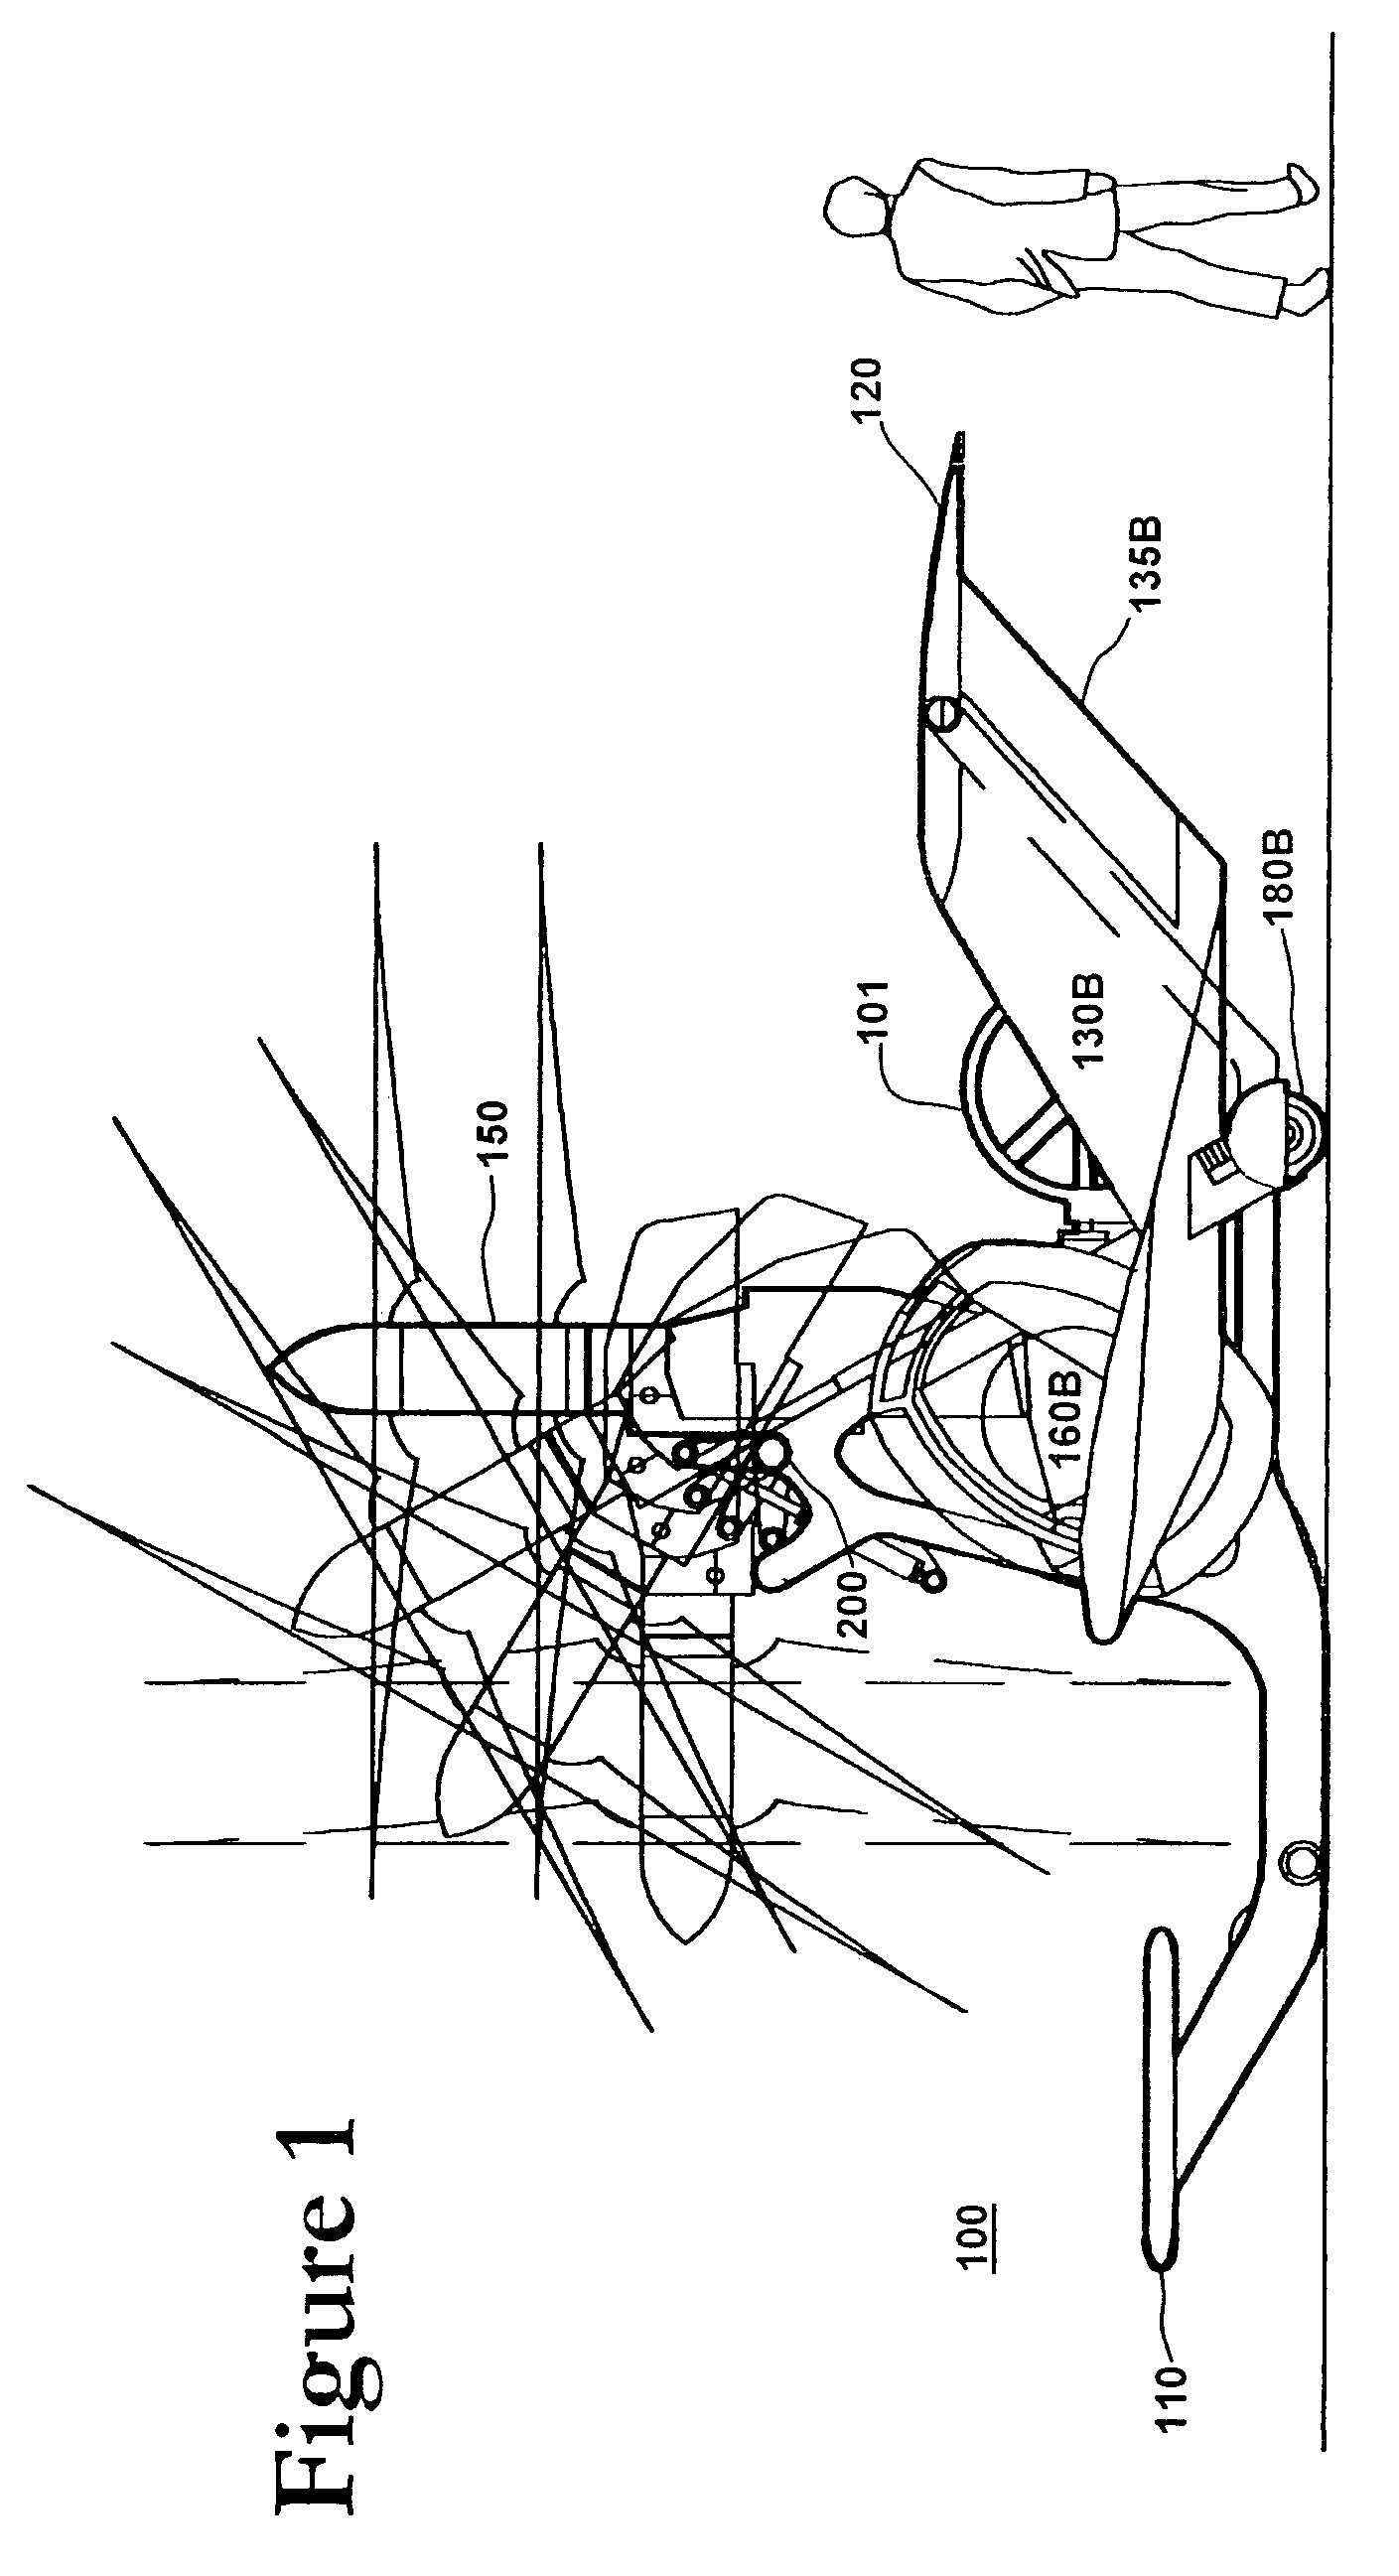 Avia tilting-rotor convertiplane